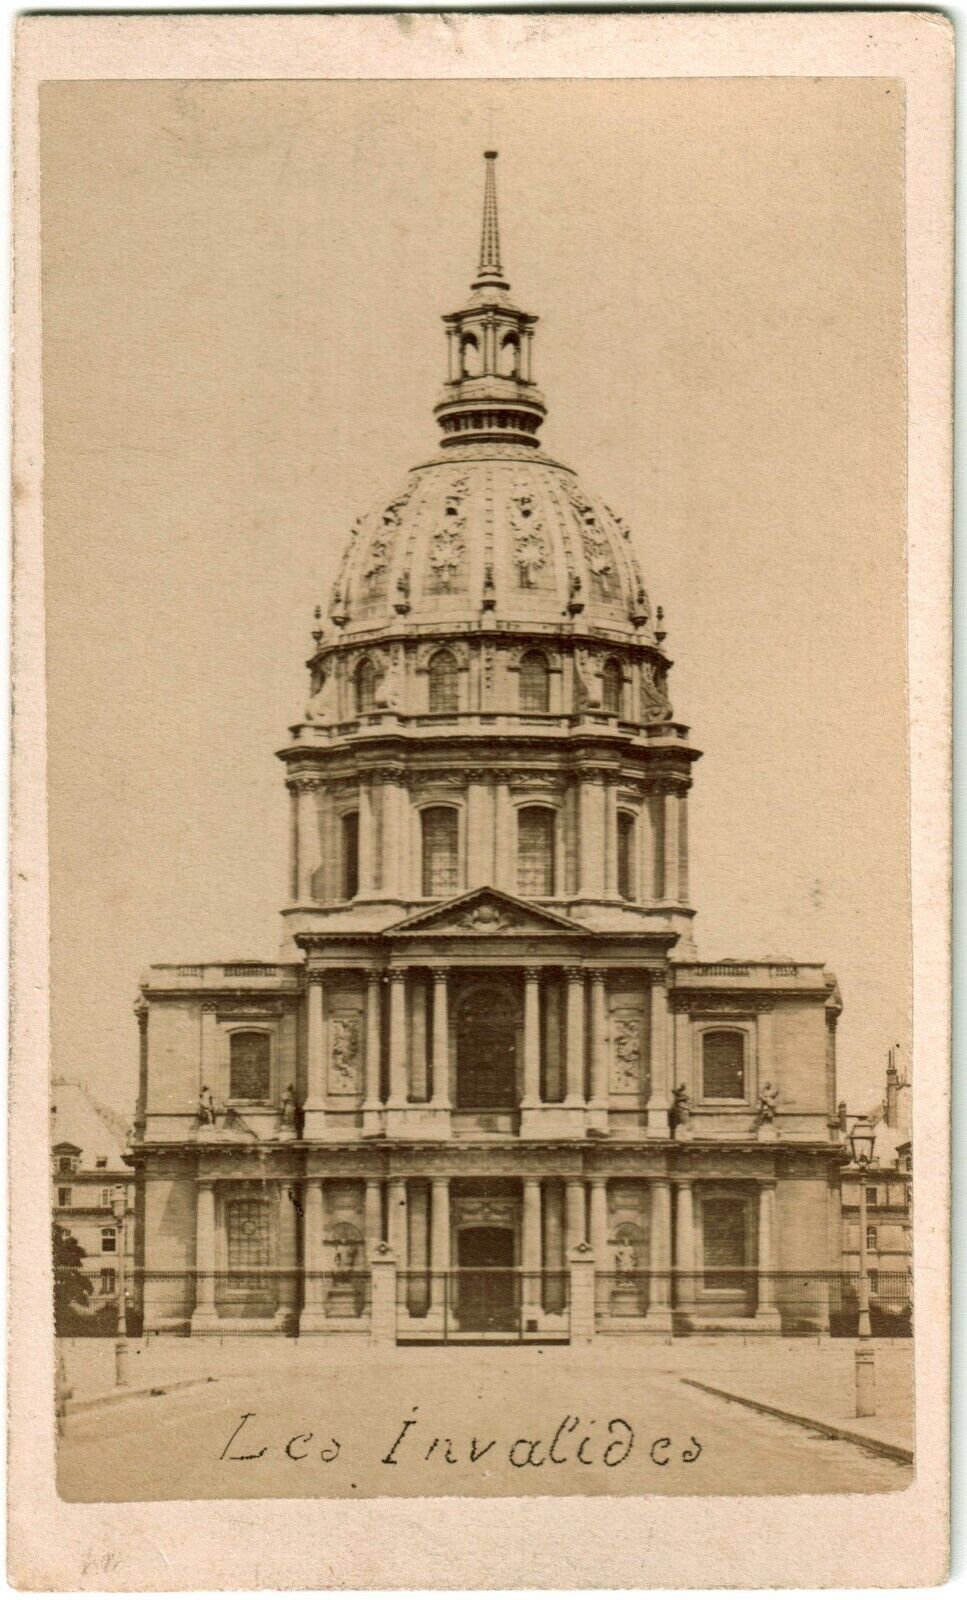 CDV Paris.Les Invalides.France.Original Albuminated Photo.Photographer Teruel 1870